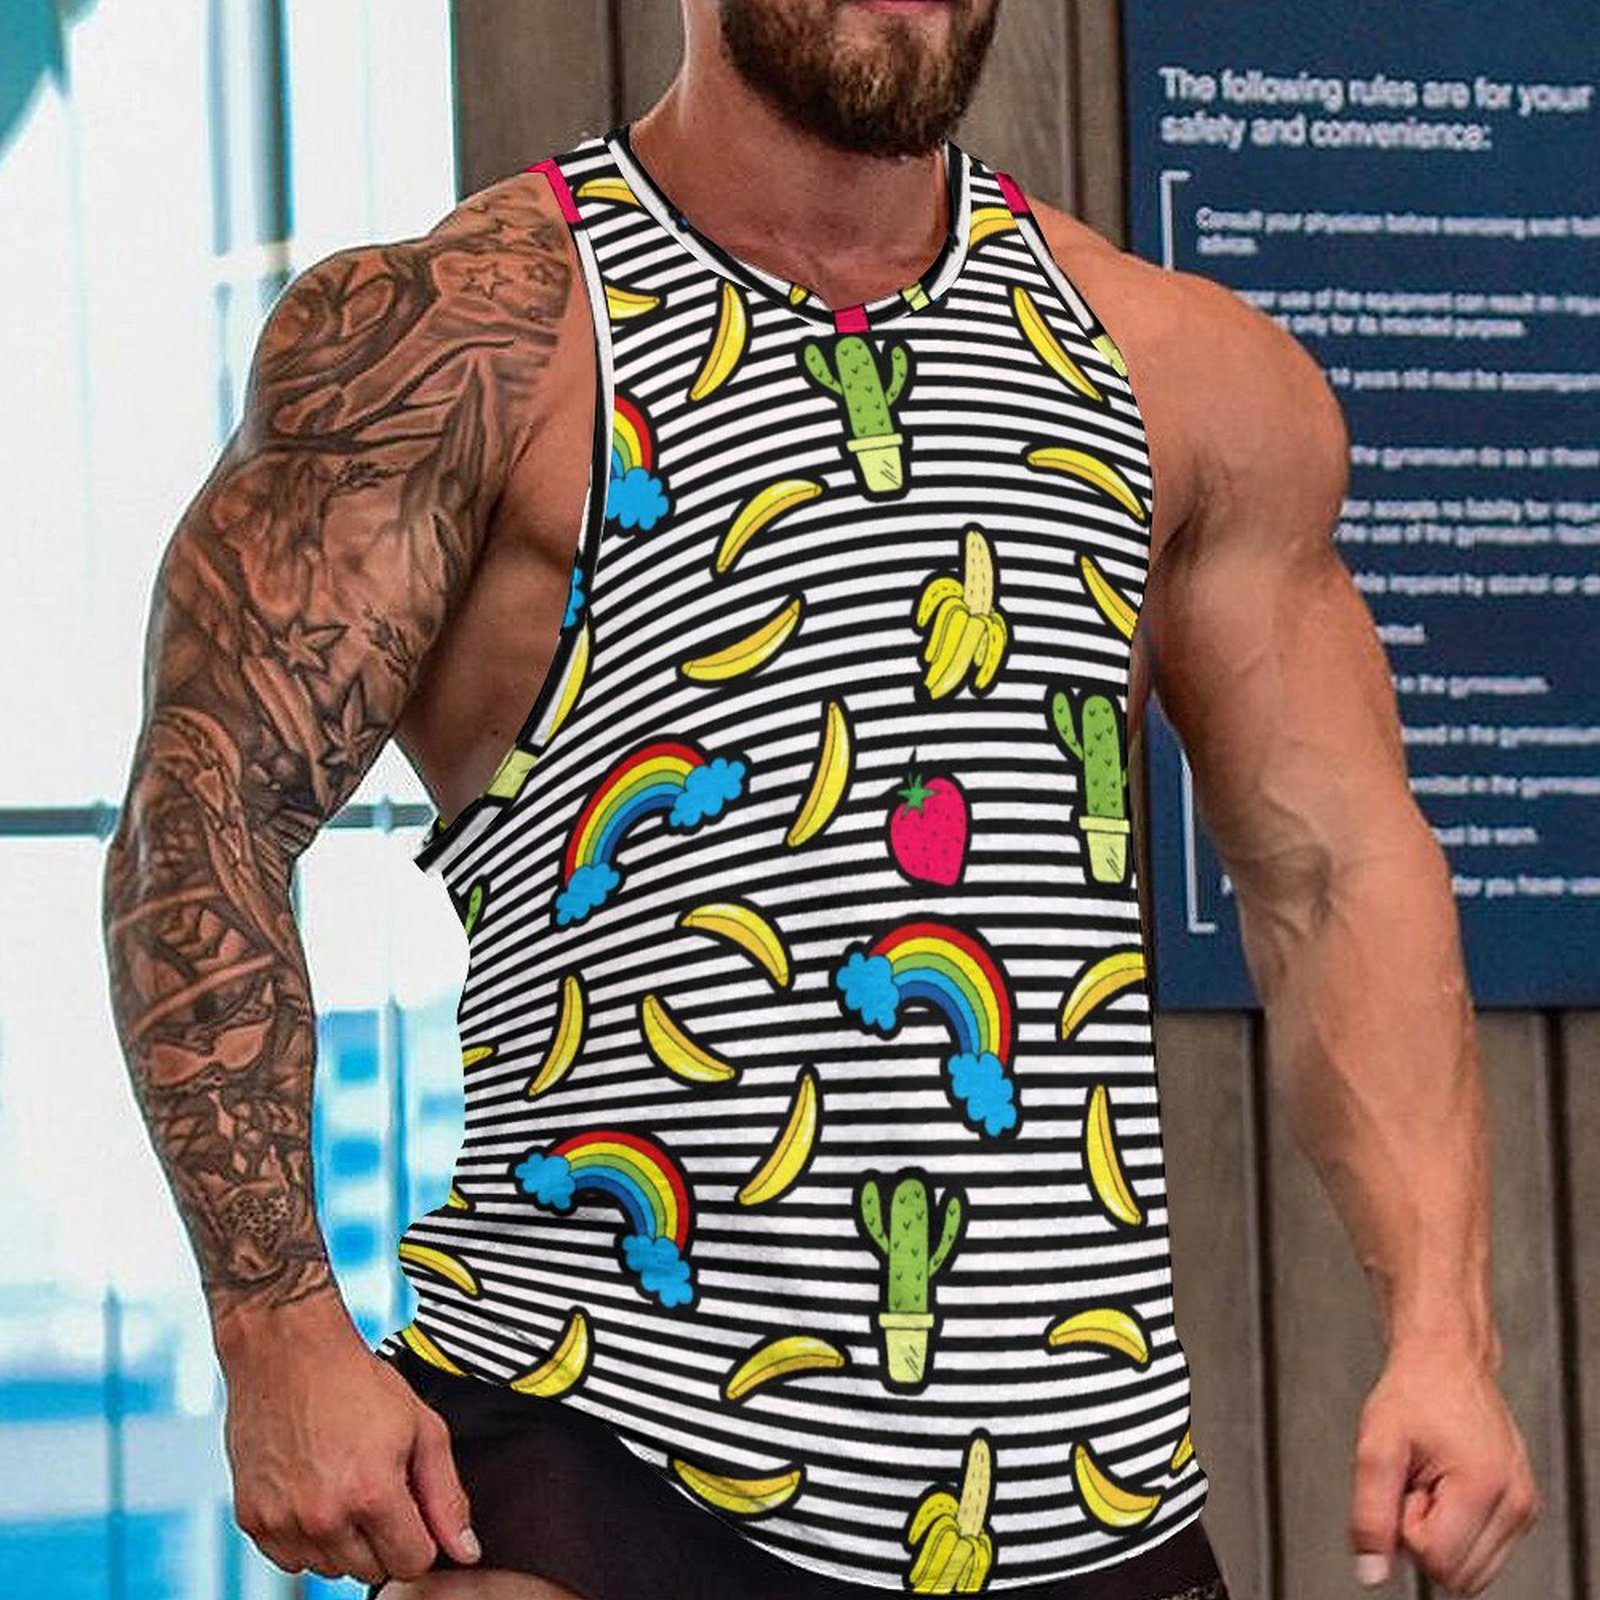 Cactus Rainbow Fruit Tank Top Men Black White Stripes Sportswear Tops Summer Gym Graphic Sleeveless Shirts Big Size 4XL 5XL